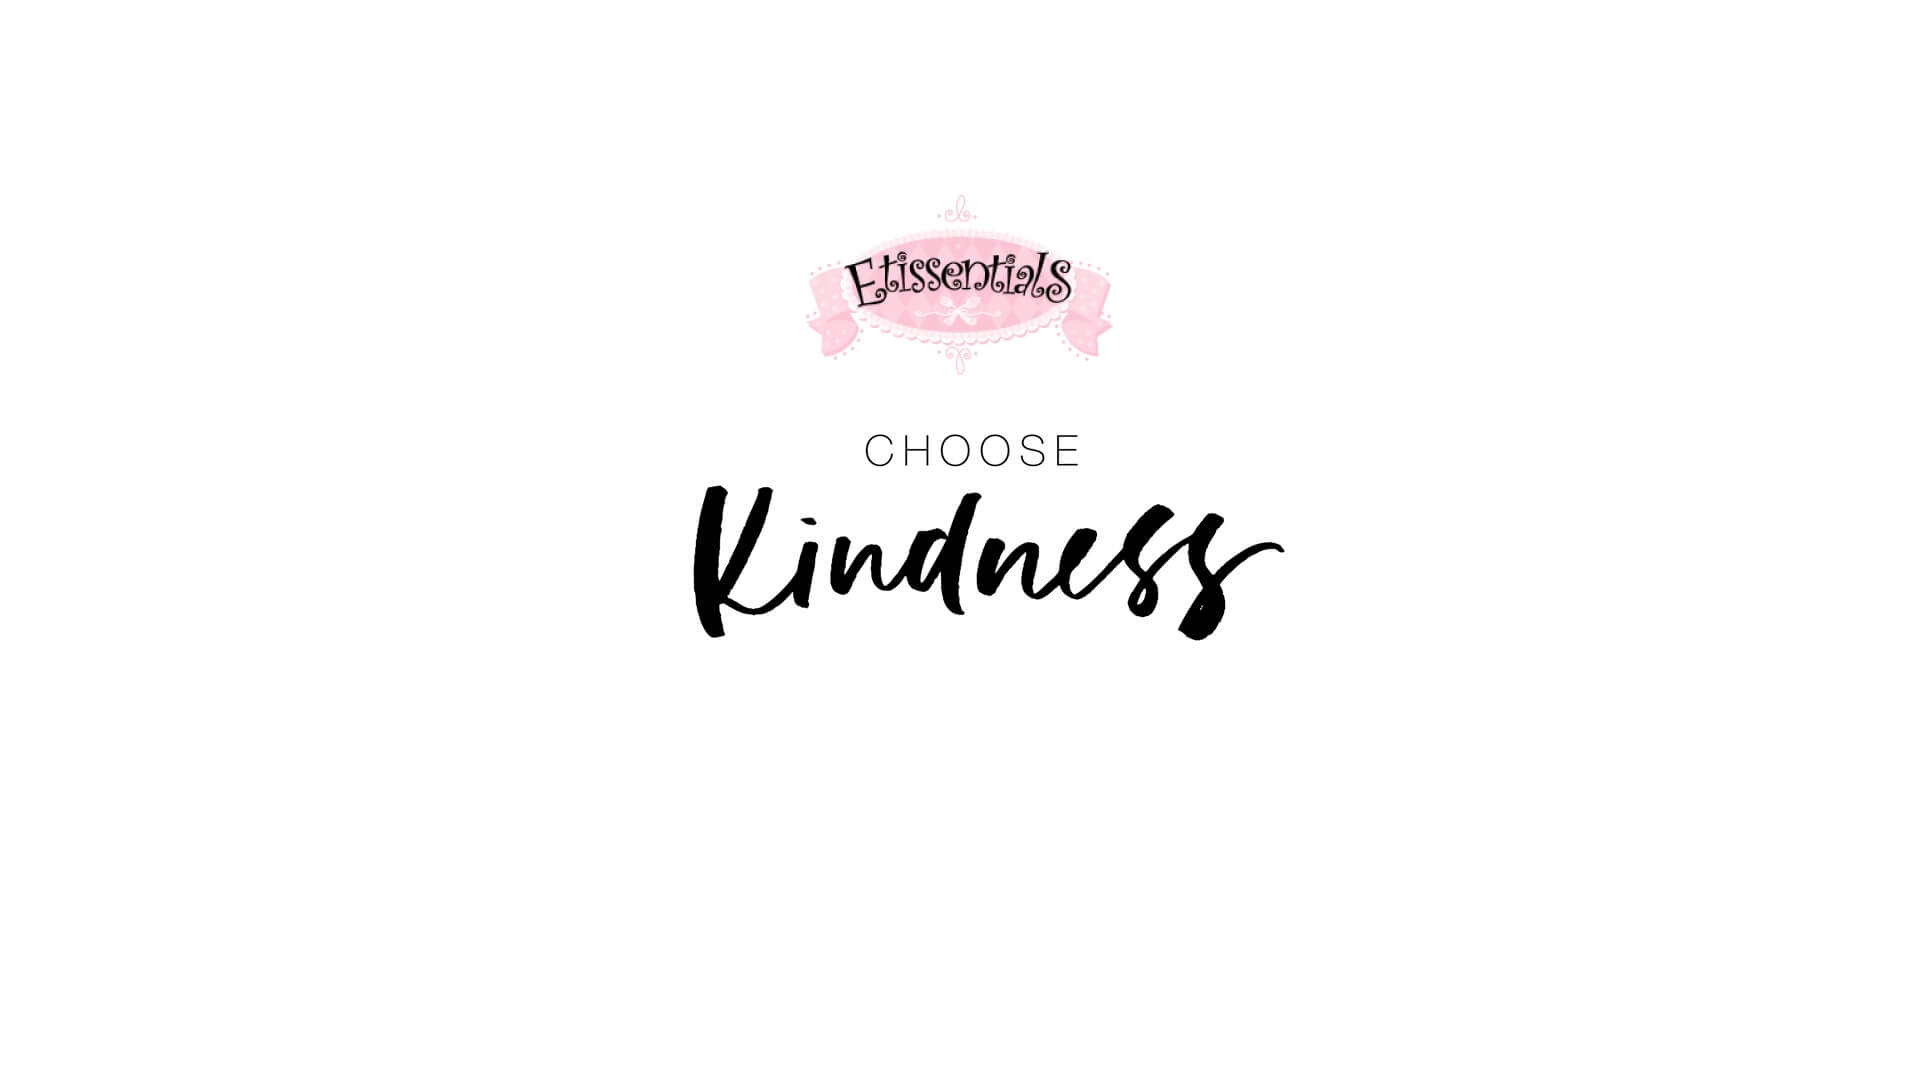 Choose Kindness